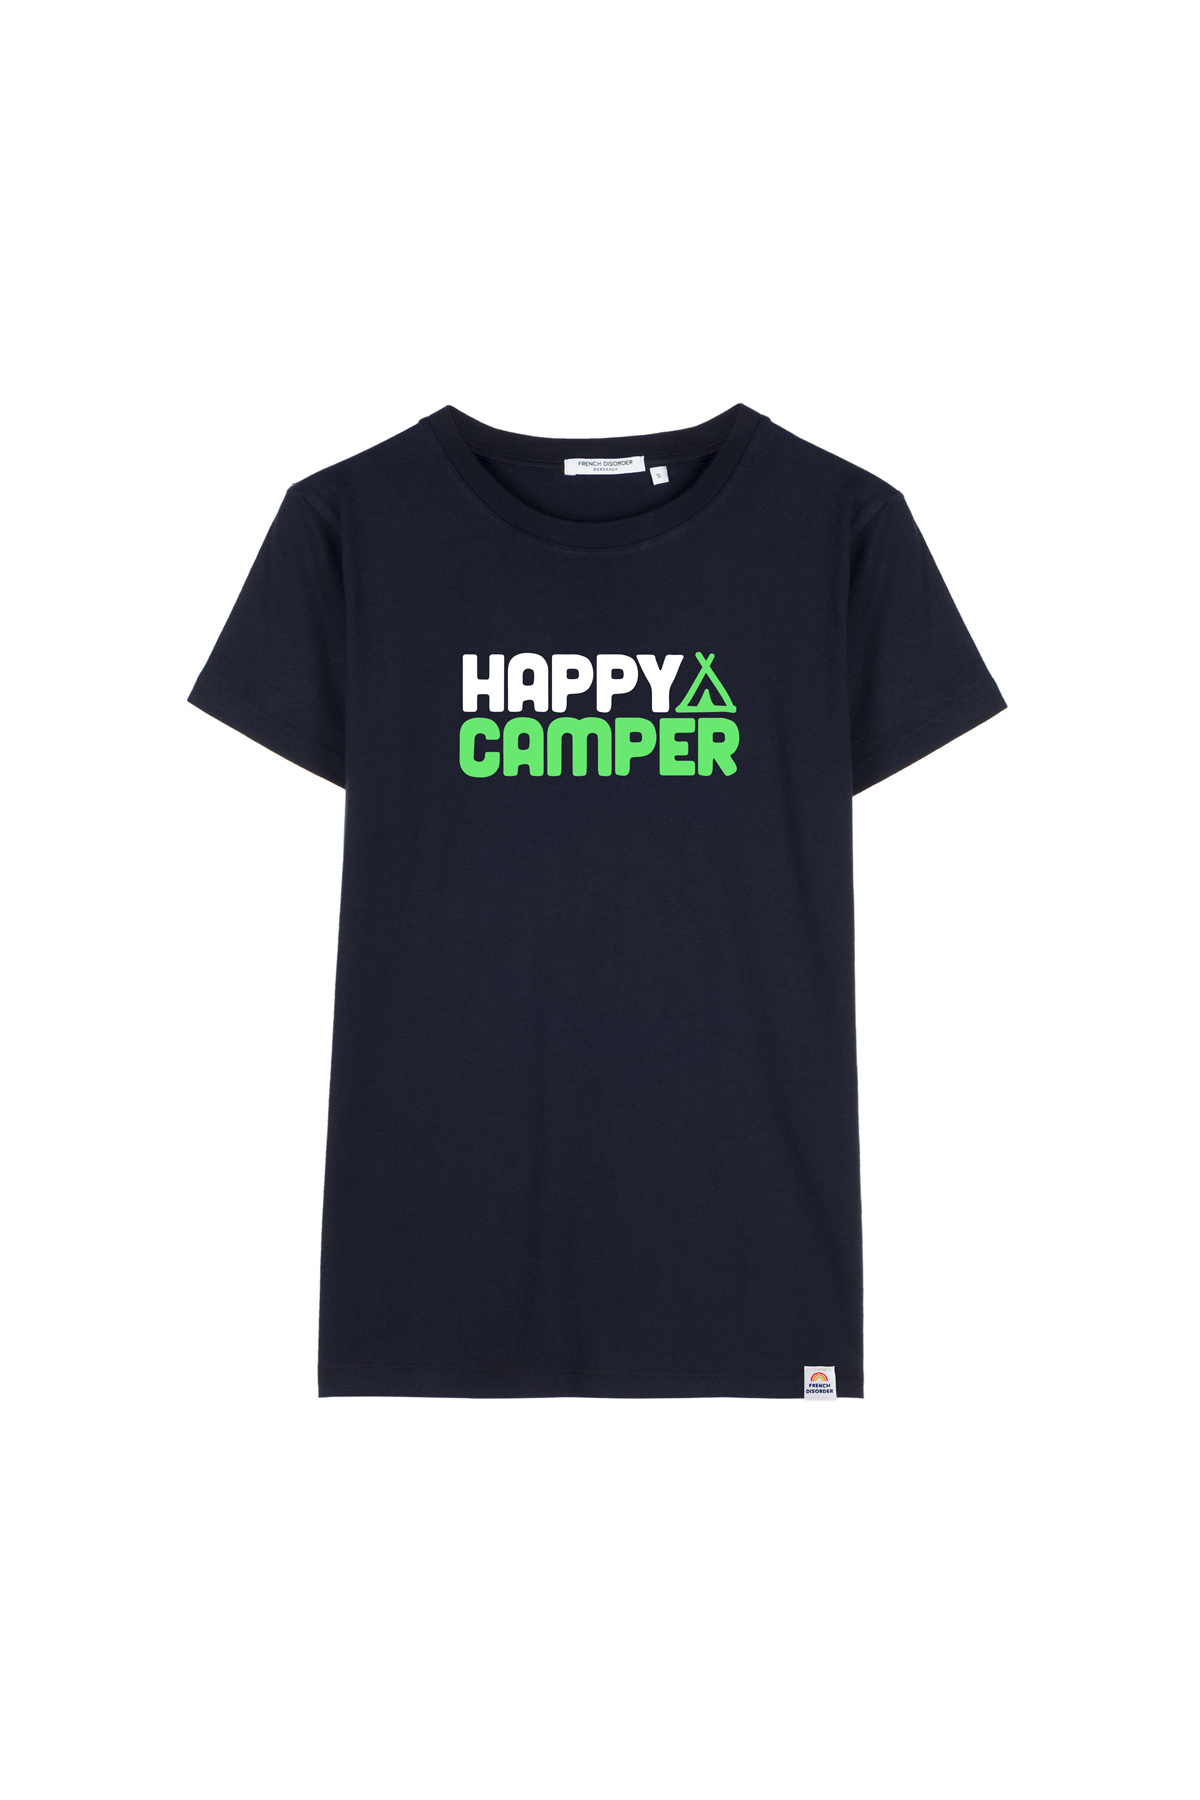 Tshirt HAPPY CAMPER